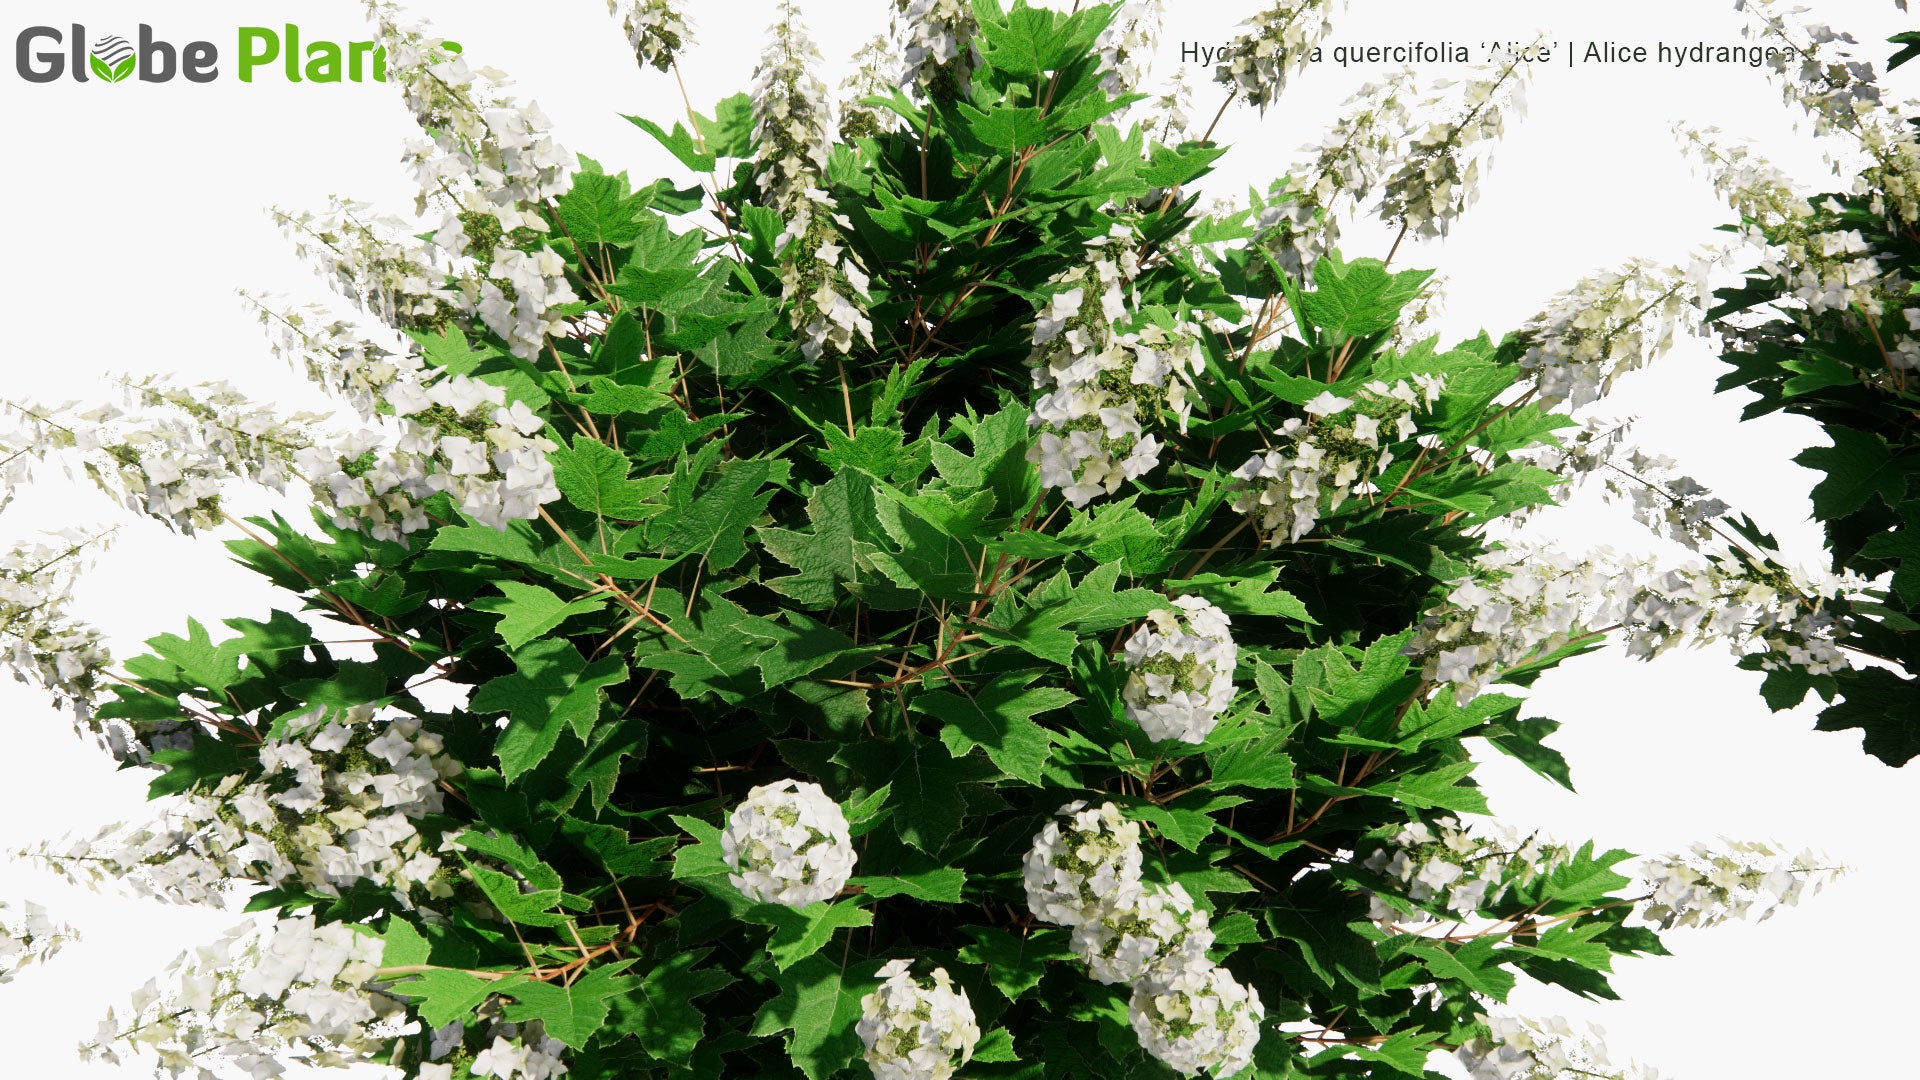 Low Poly Hydrangea Quercifolia 'Alice' - Alice Hydrangea (3D Model)